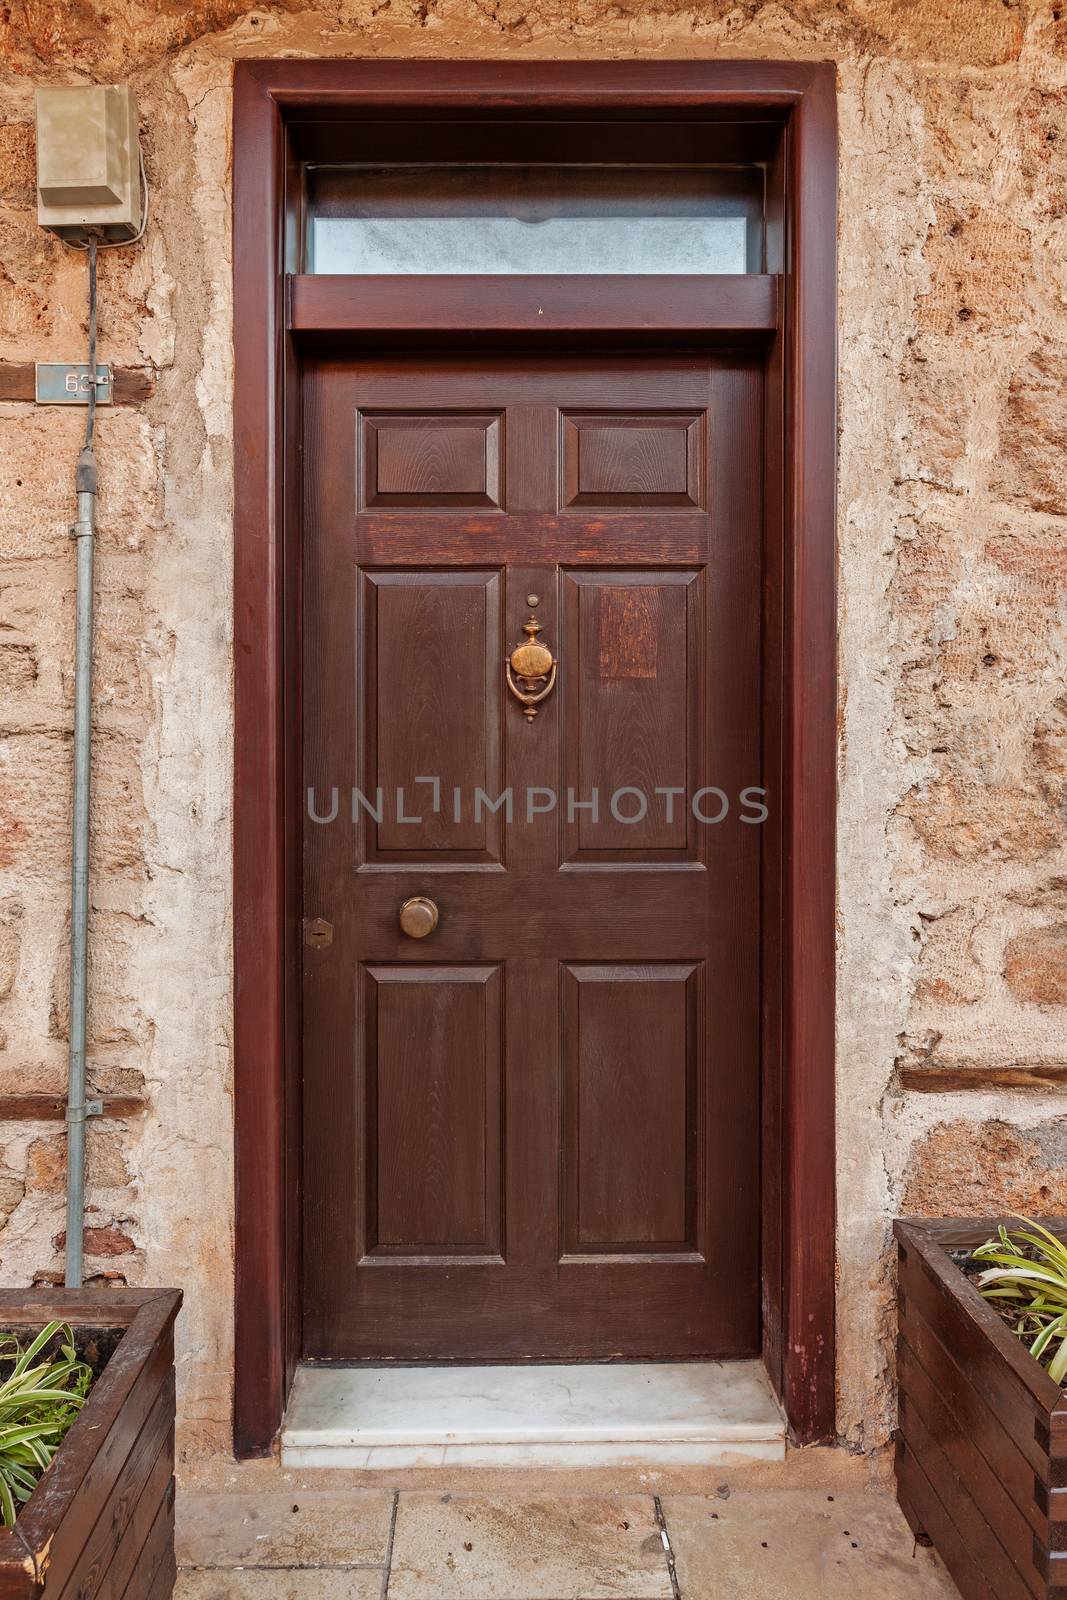 Old vintage grunge wooden door in rustic stone wall